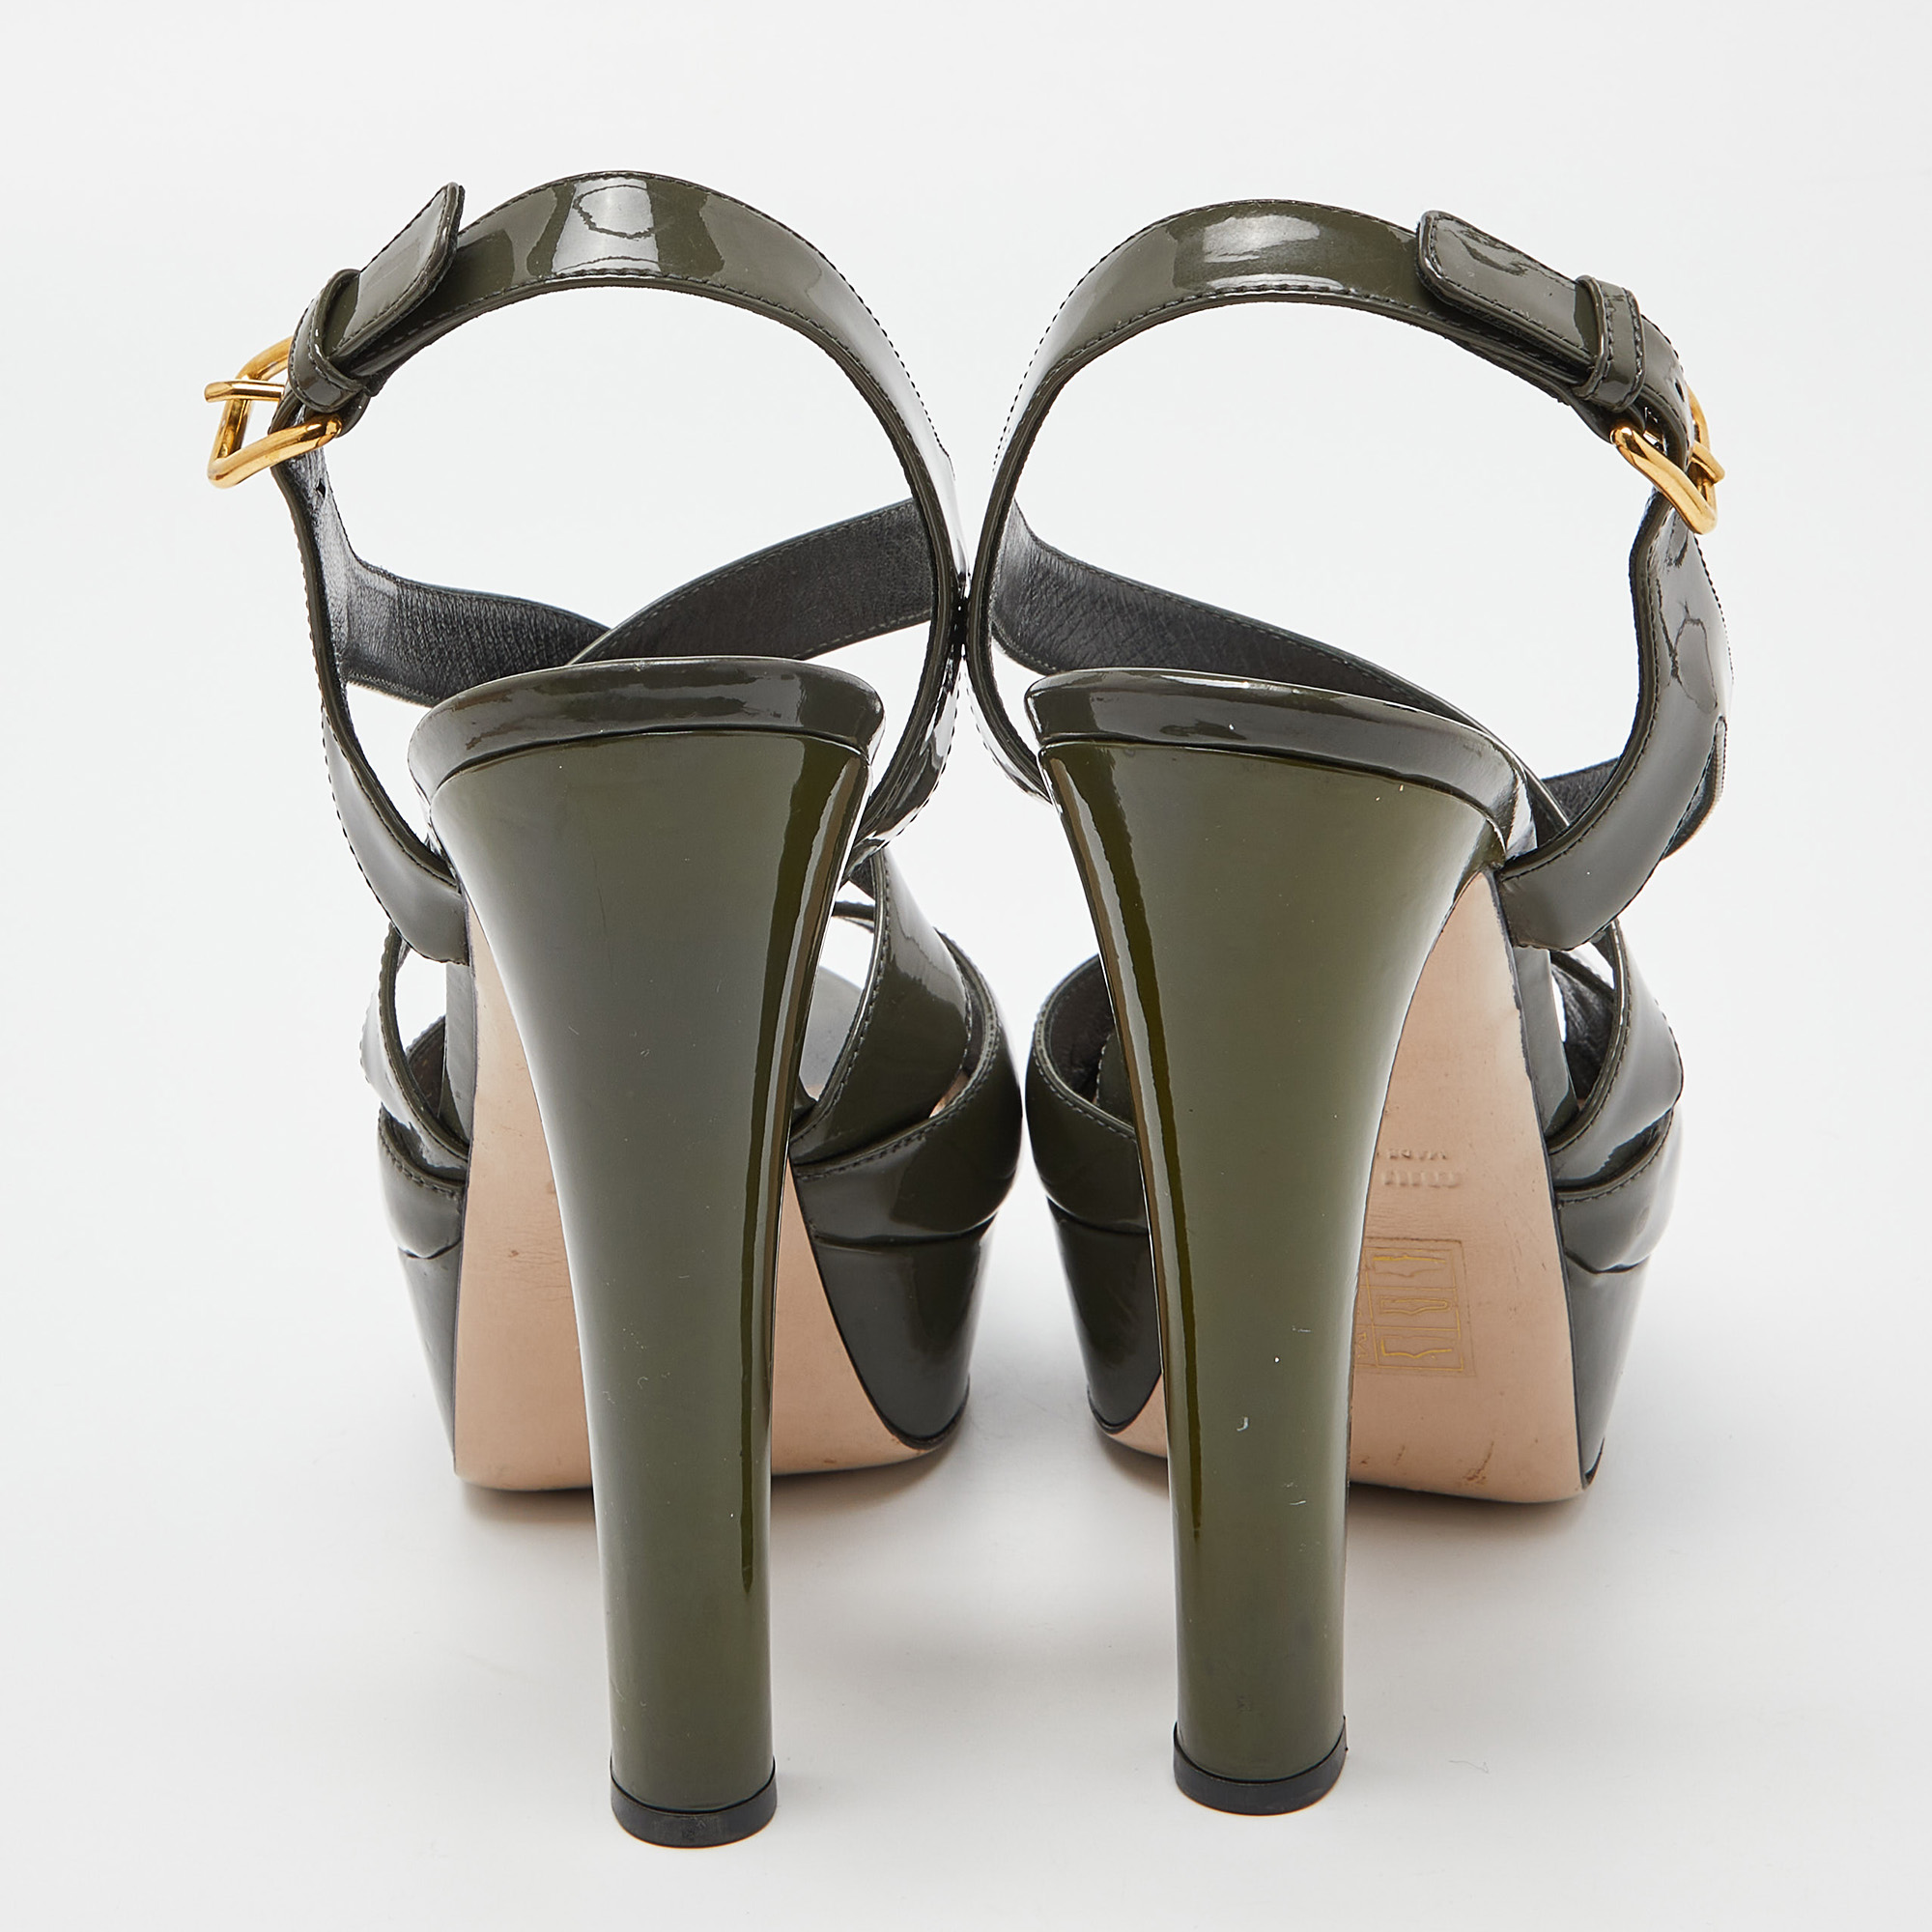 Miu Miu Olive Green Patent Leather Platform Ankle Cross Strap Sandals Size 39